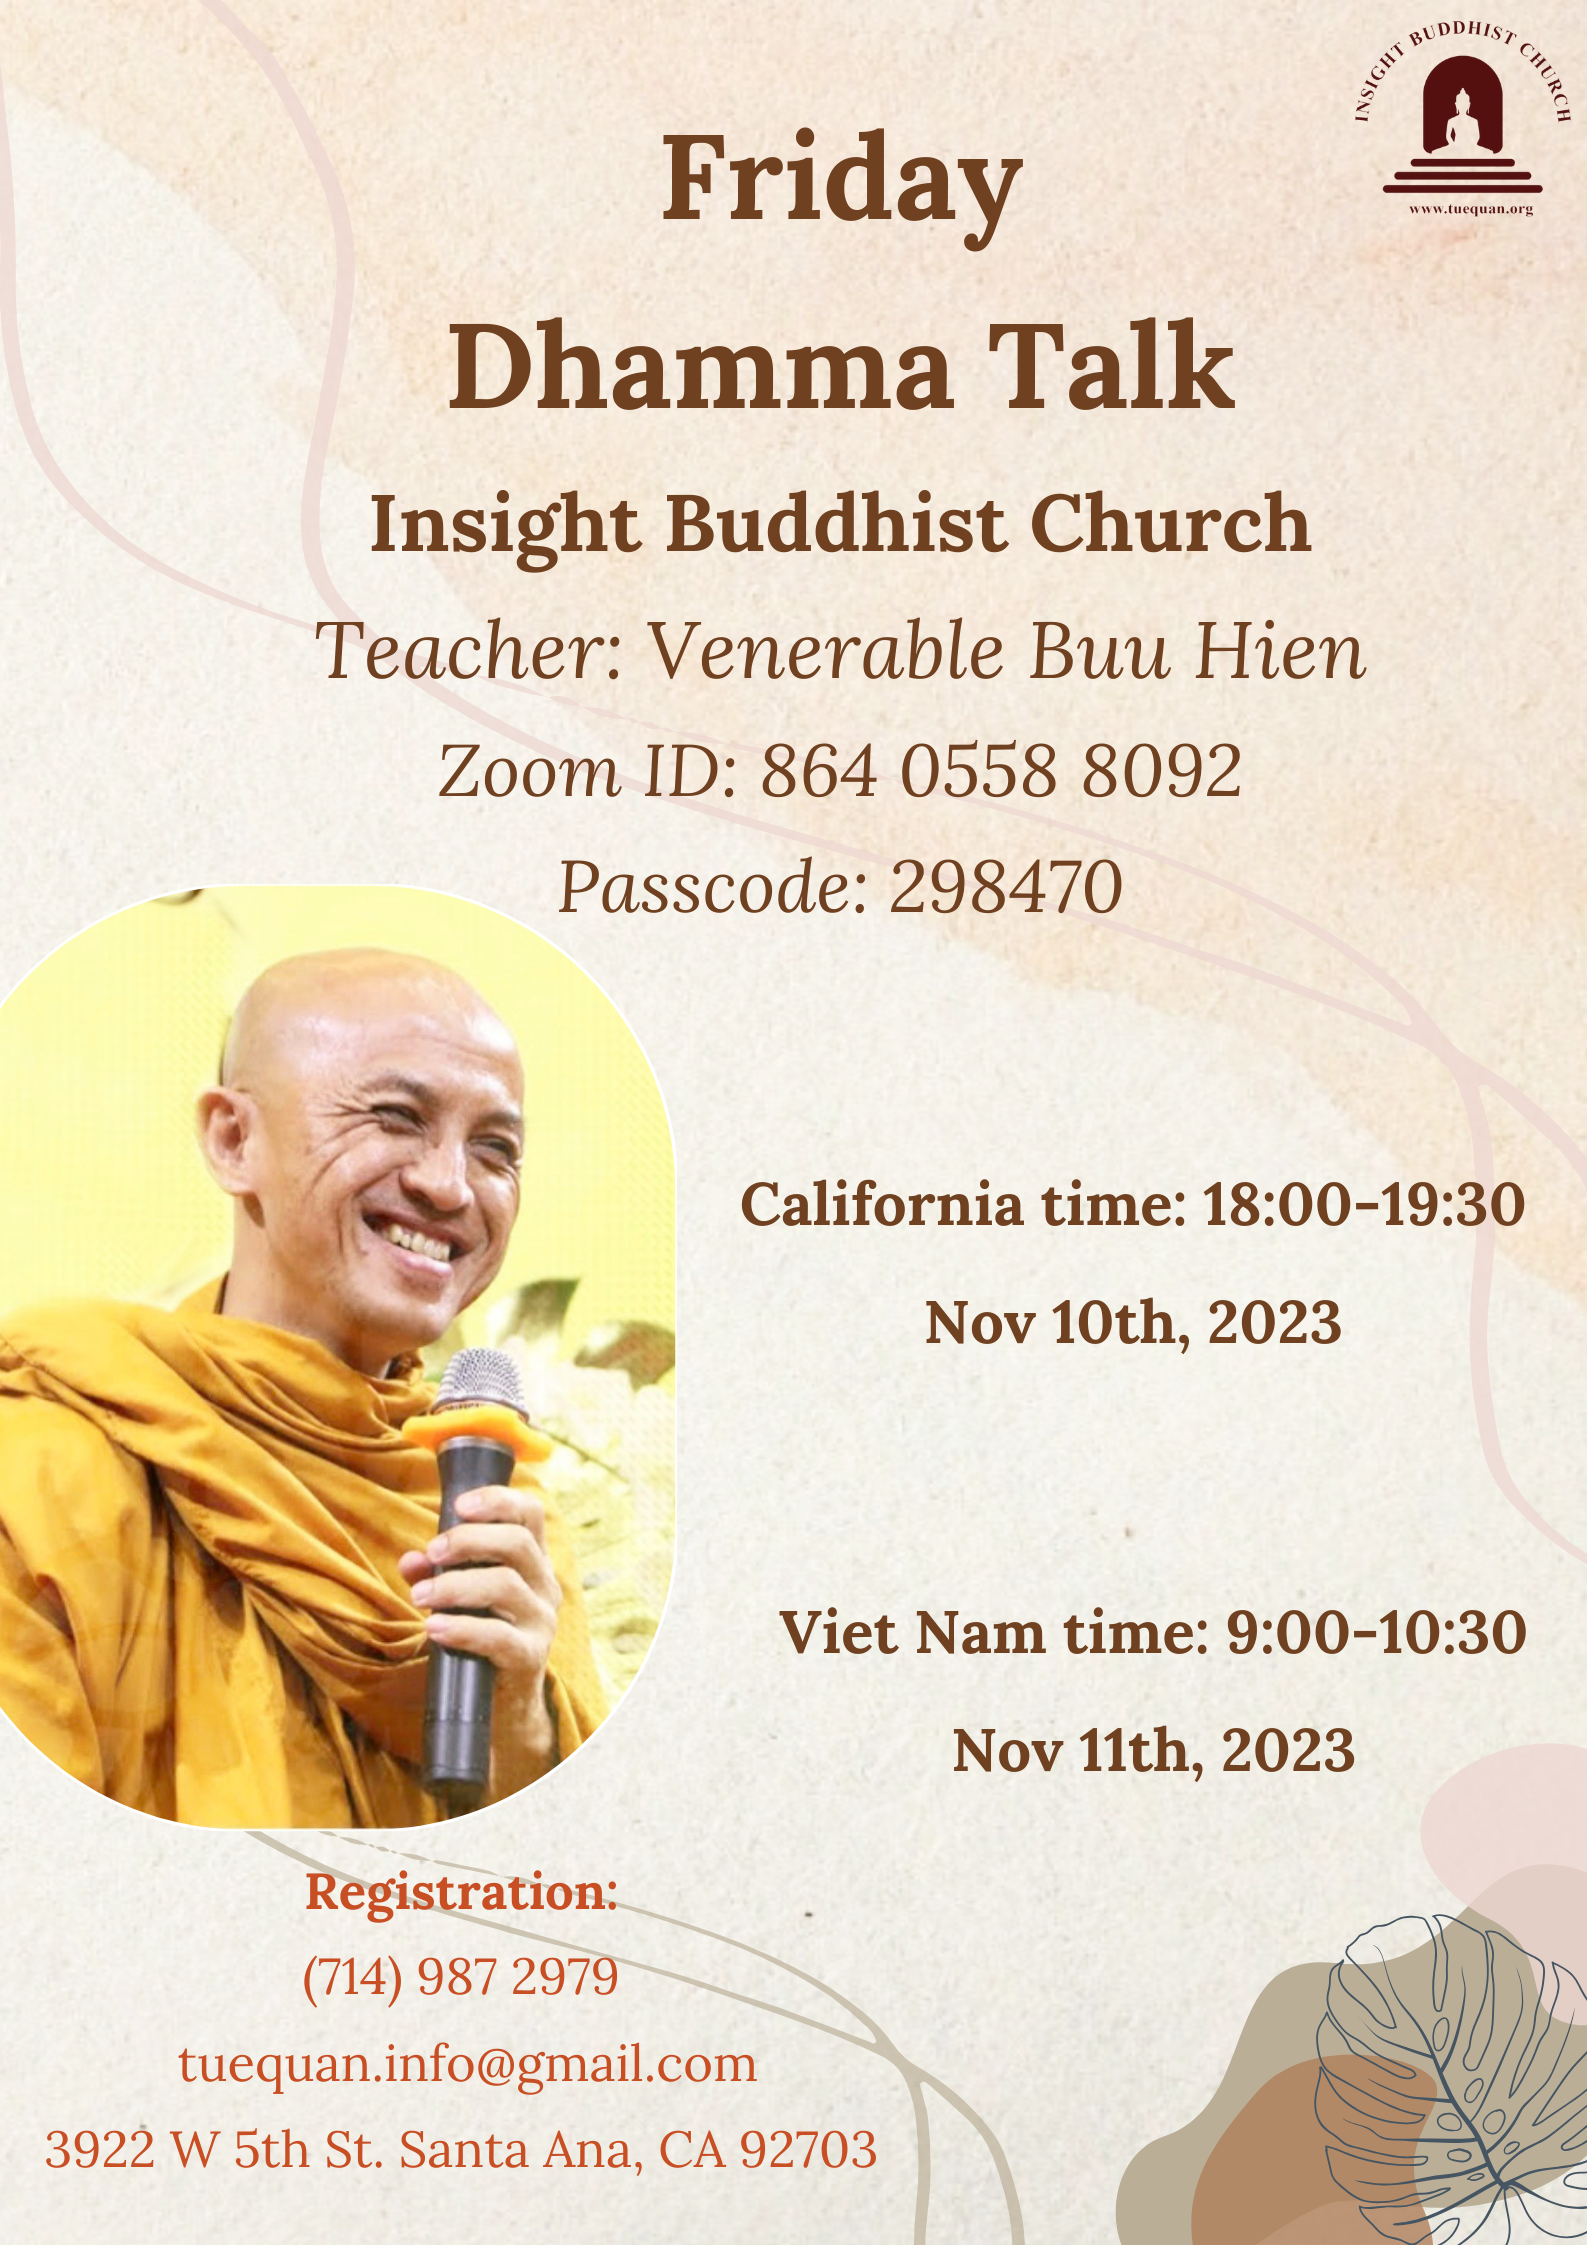 Friday Dhamma Talk, Nov 10th, 2023